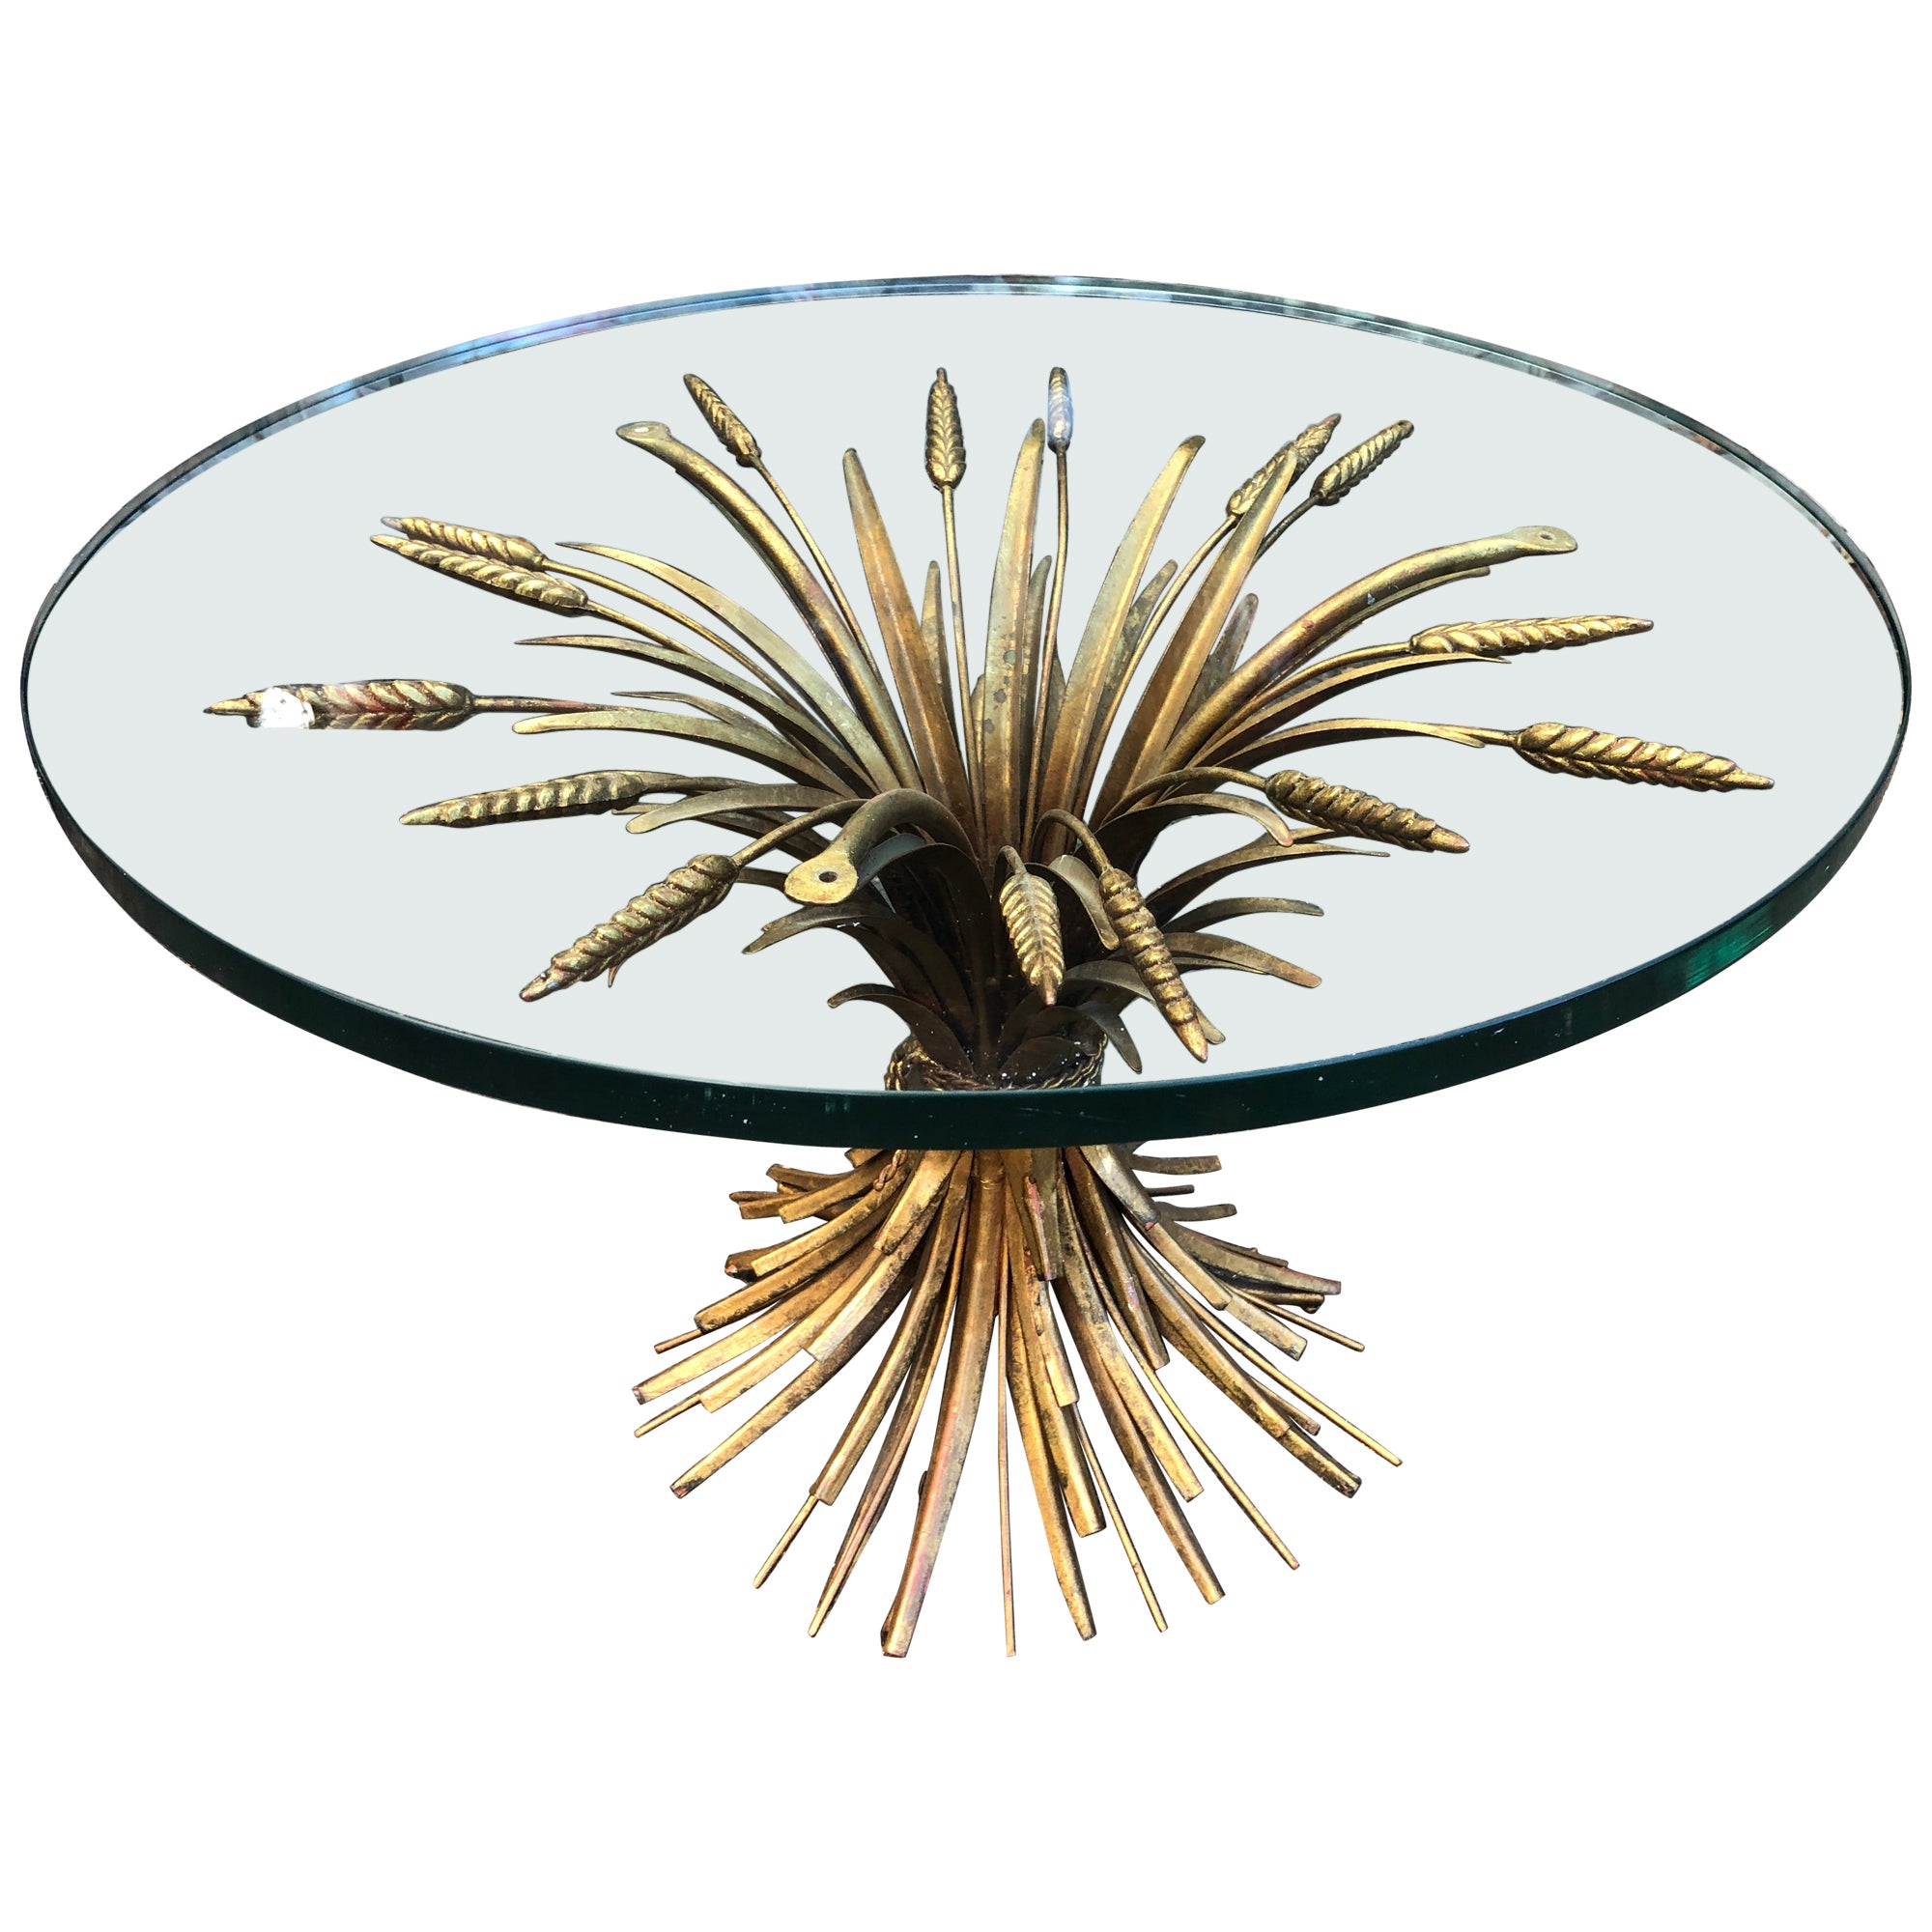 Superbe table d'appoint Hollywood Regency dorée style Coco Chanel style blé en vente